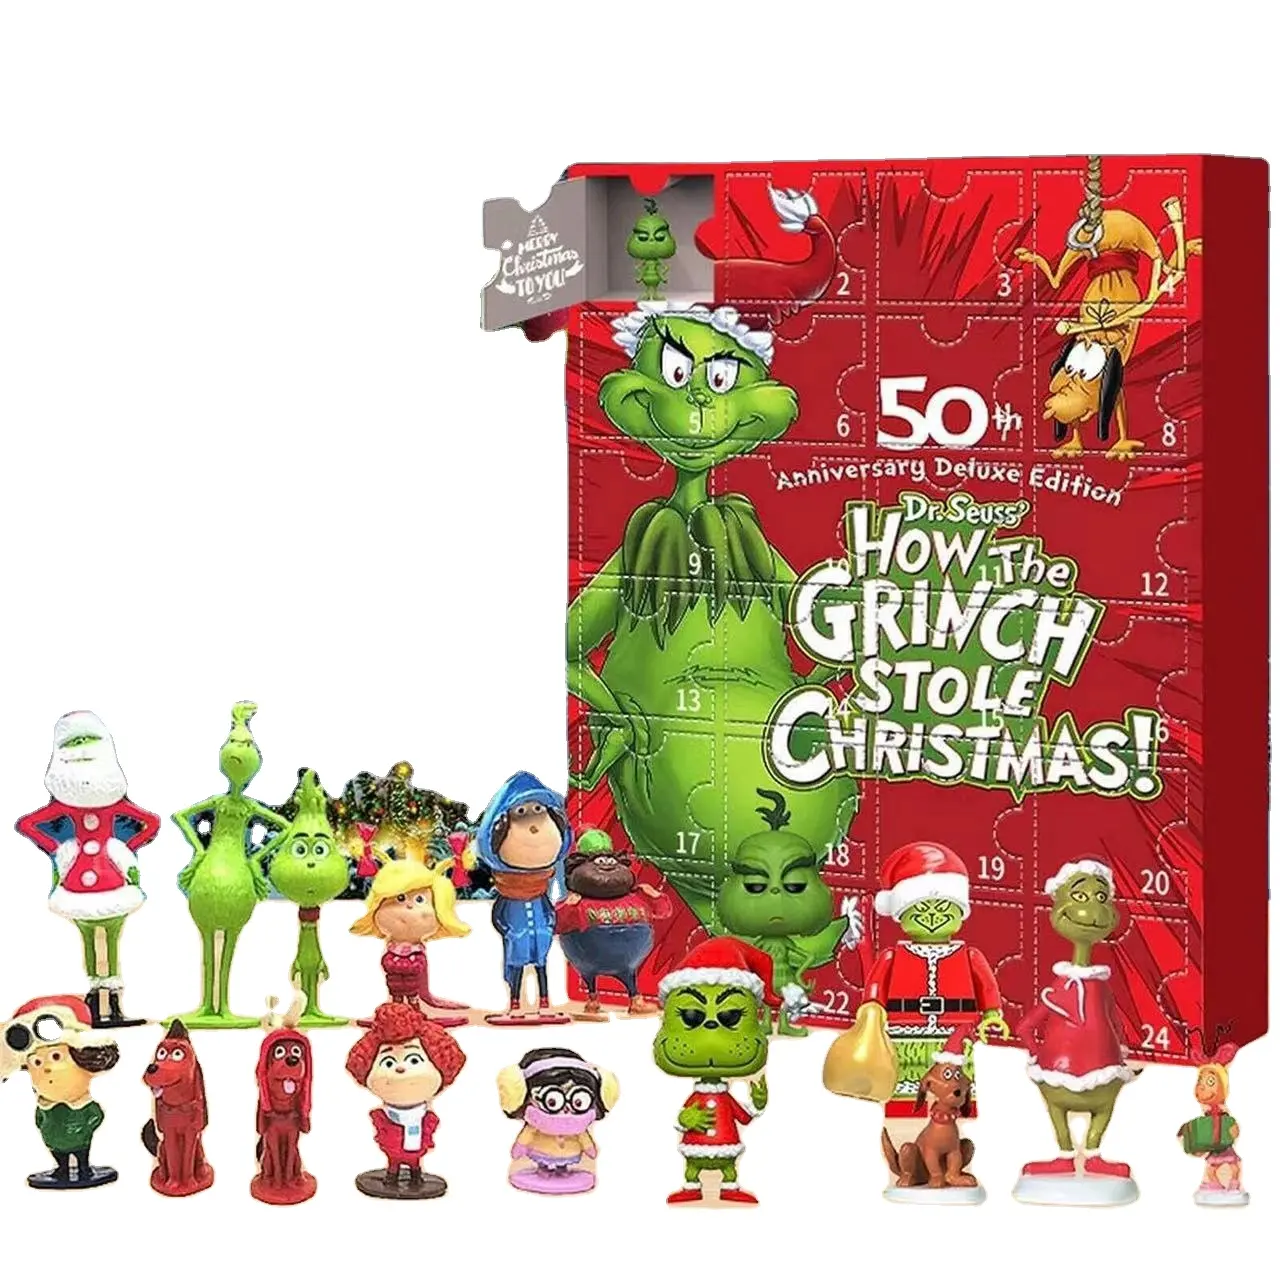 Kotak hadiah Dekorasi resin hijau Grinch kotak tirai Natal kalender hitung mundur Halloween baru lintas batas